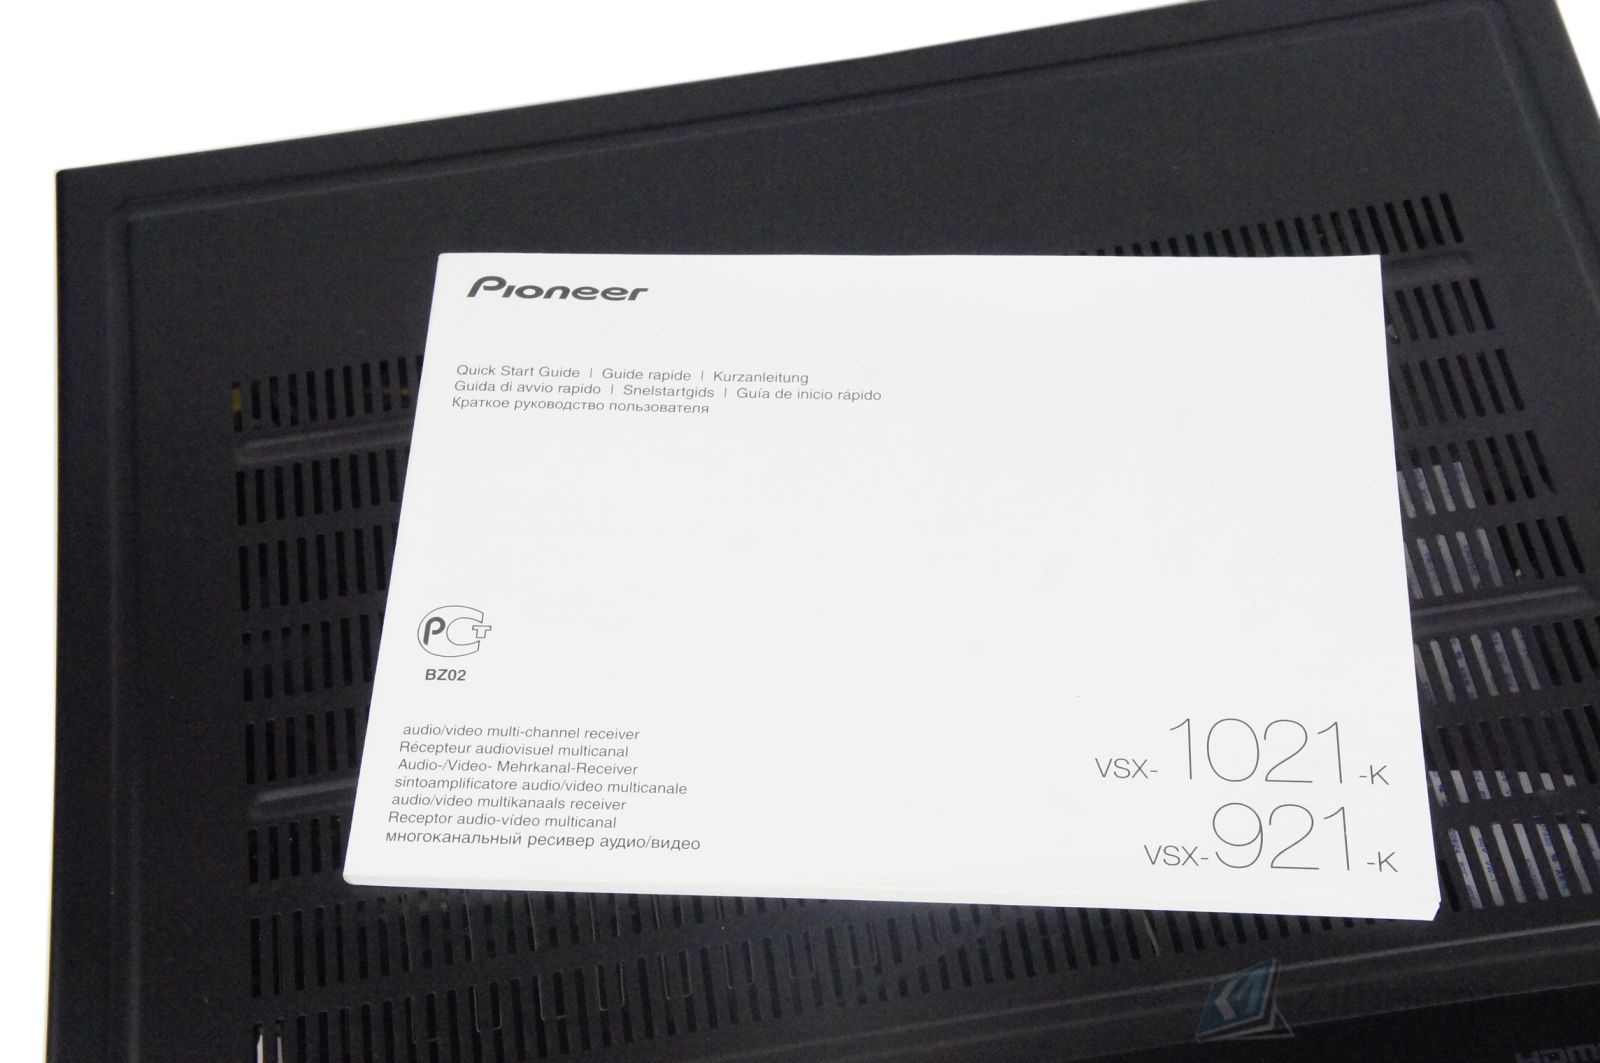 Pioneer_VSX-921-K_7.1_AV-Receiver_16